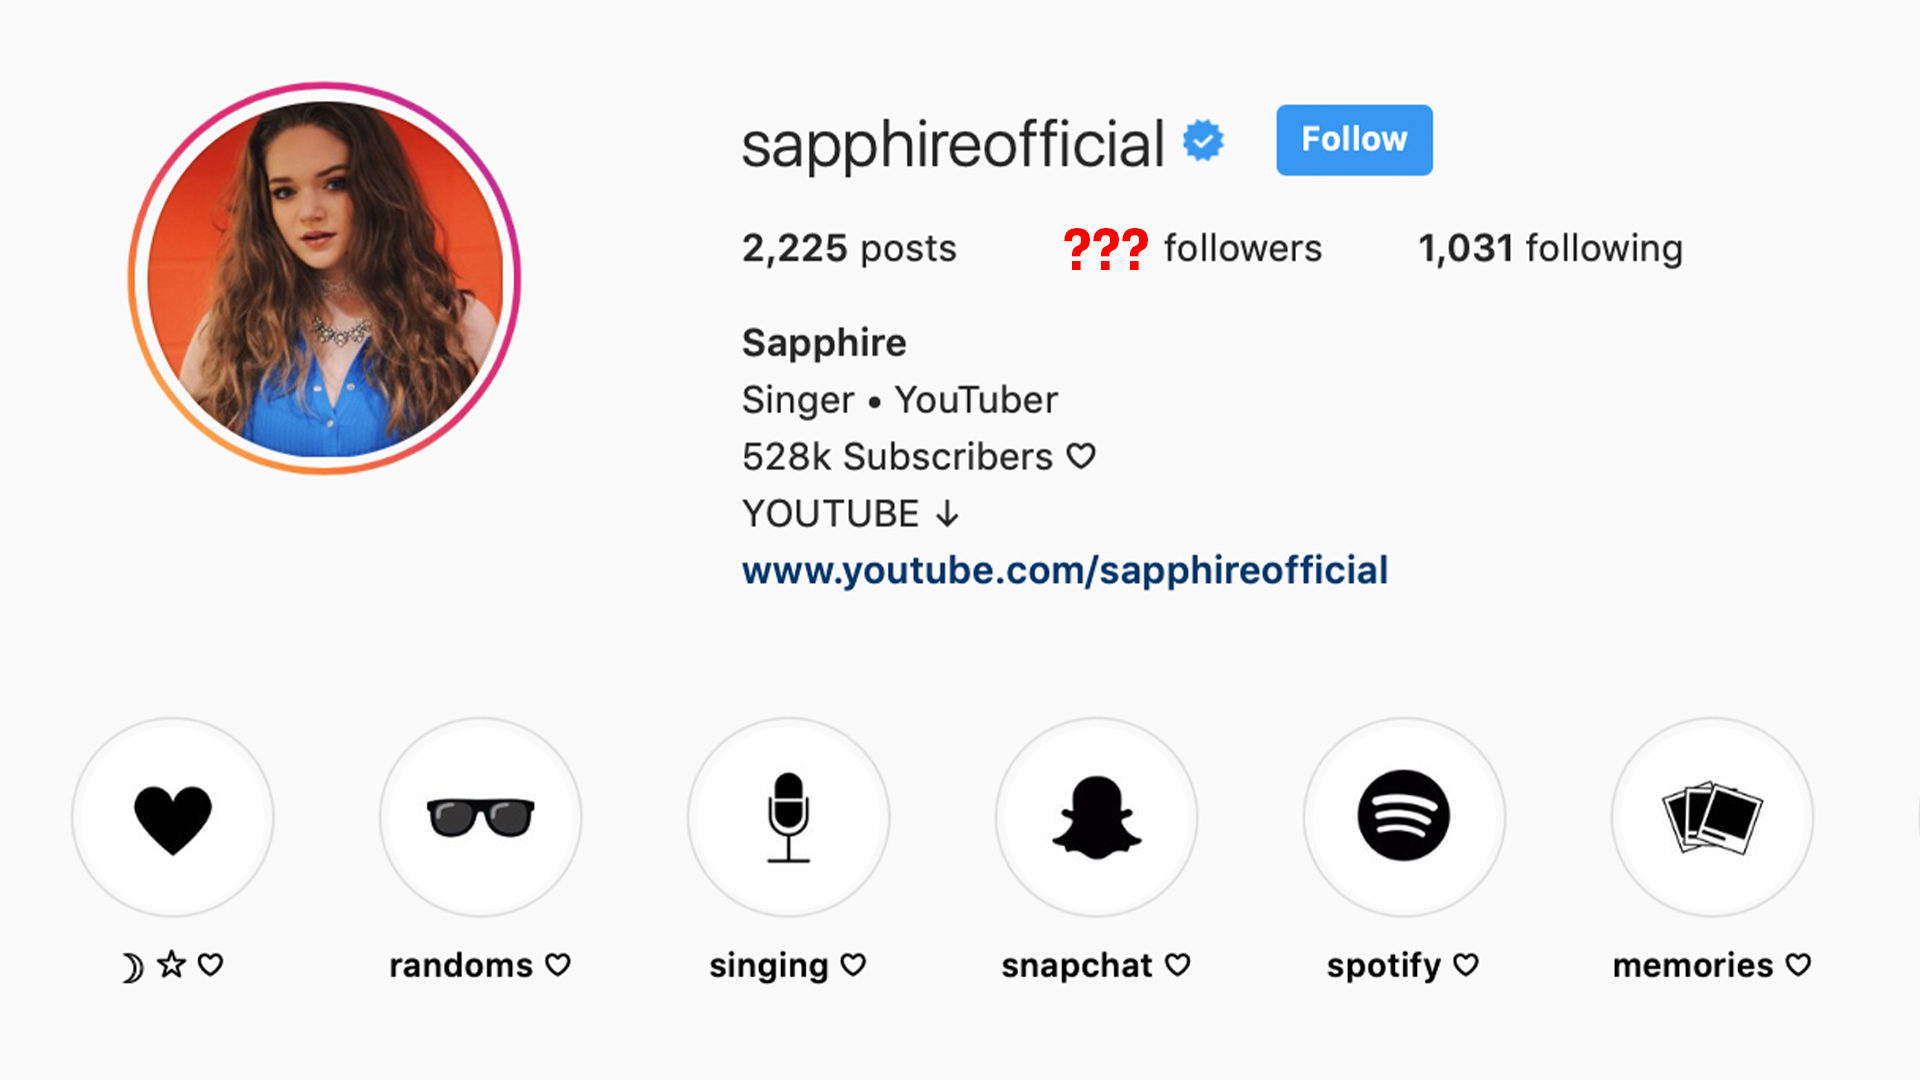 Sapphire's Instagram